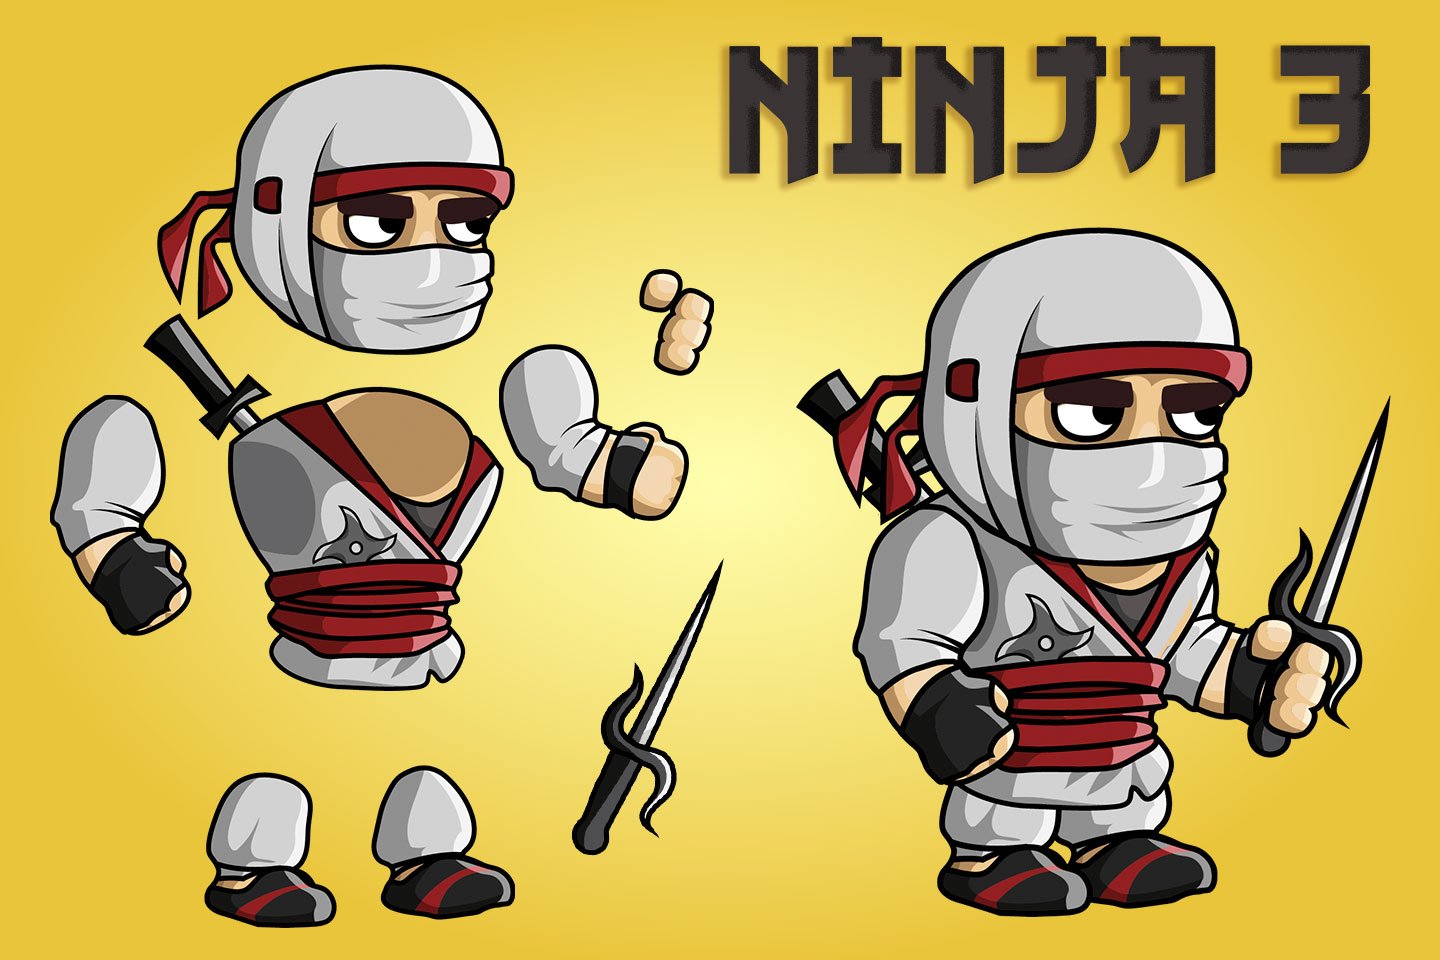 Ninja 2d character